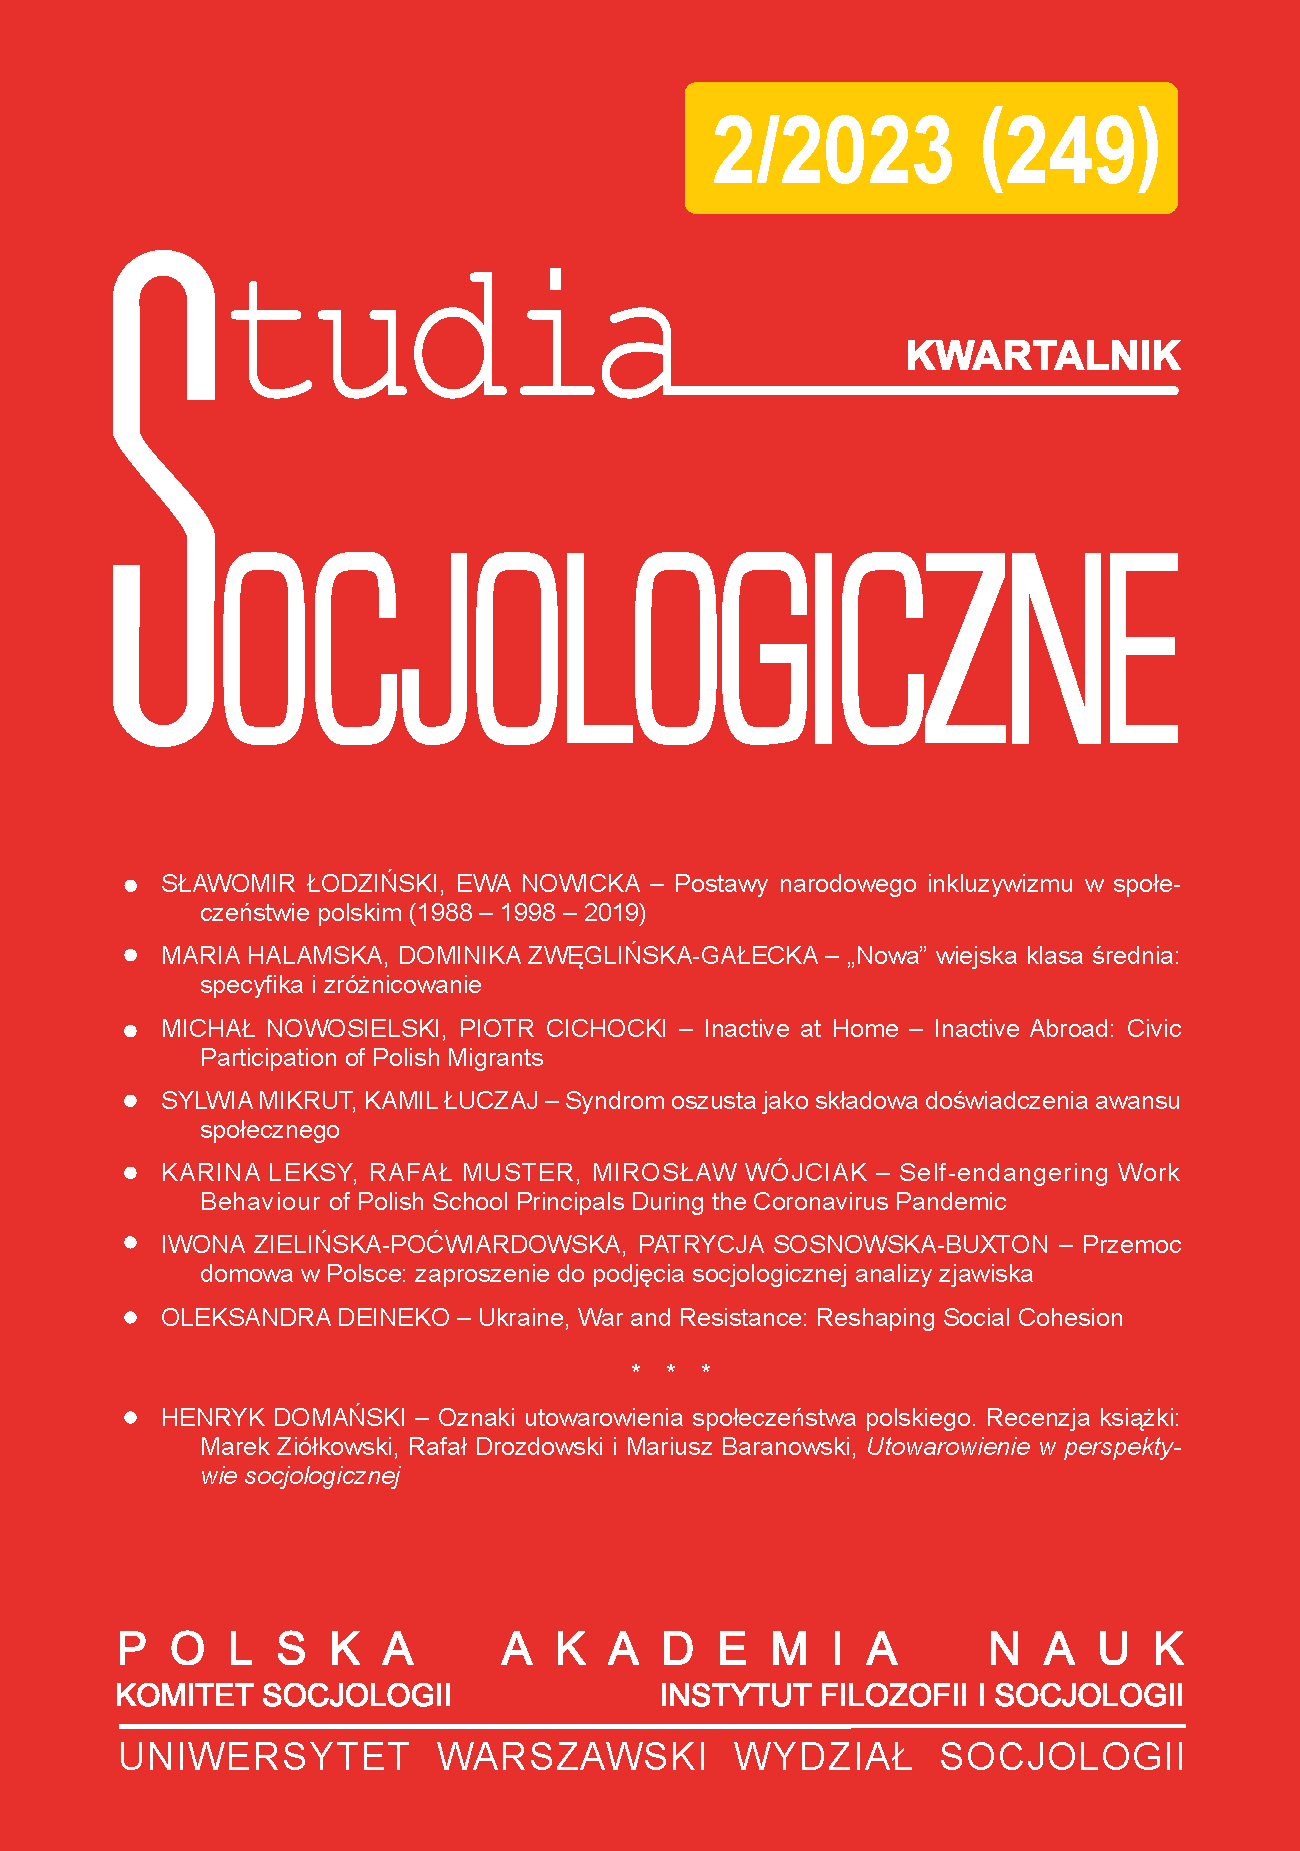 Self-endangering Work Behaviour of Polish School Principals During the Coronavirus Pandemic Cover Image